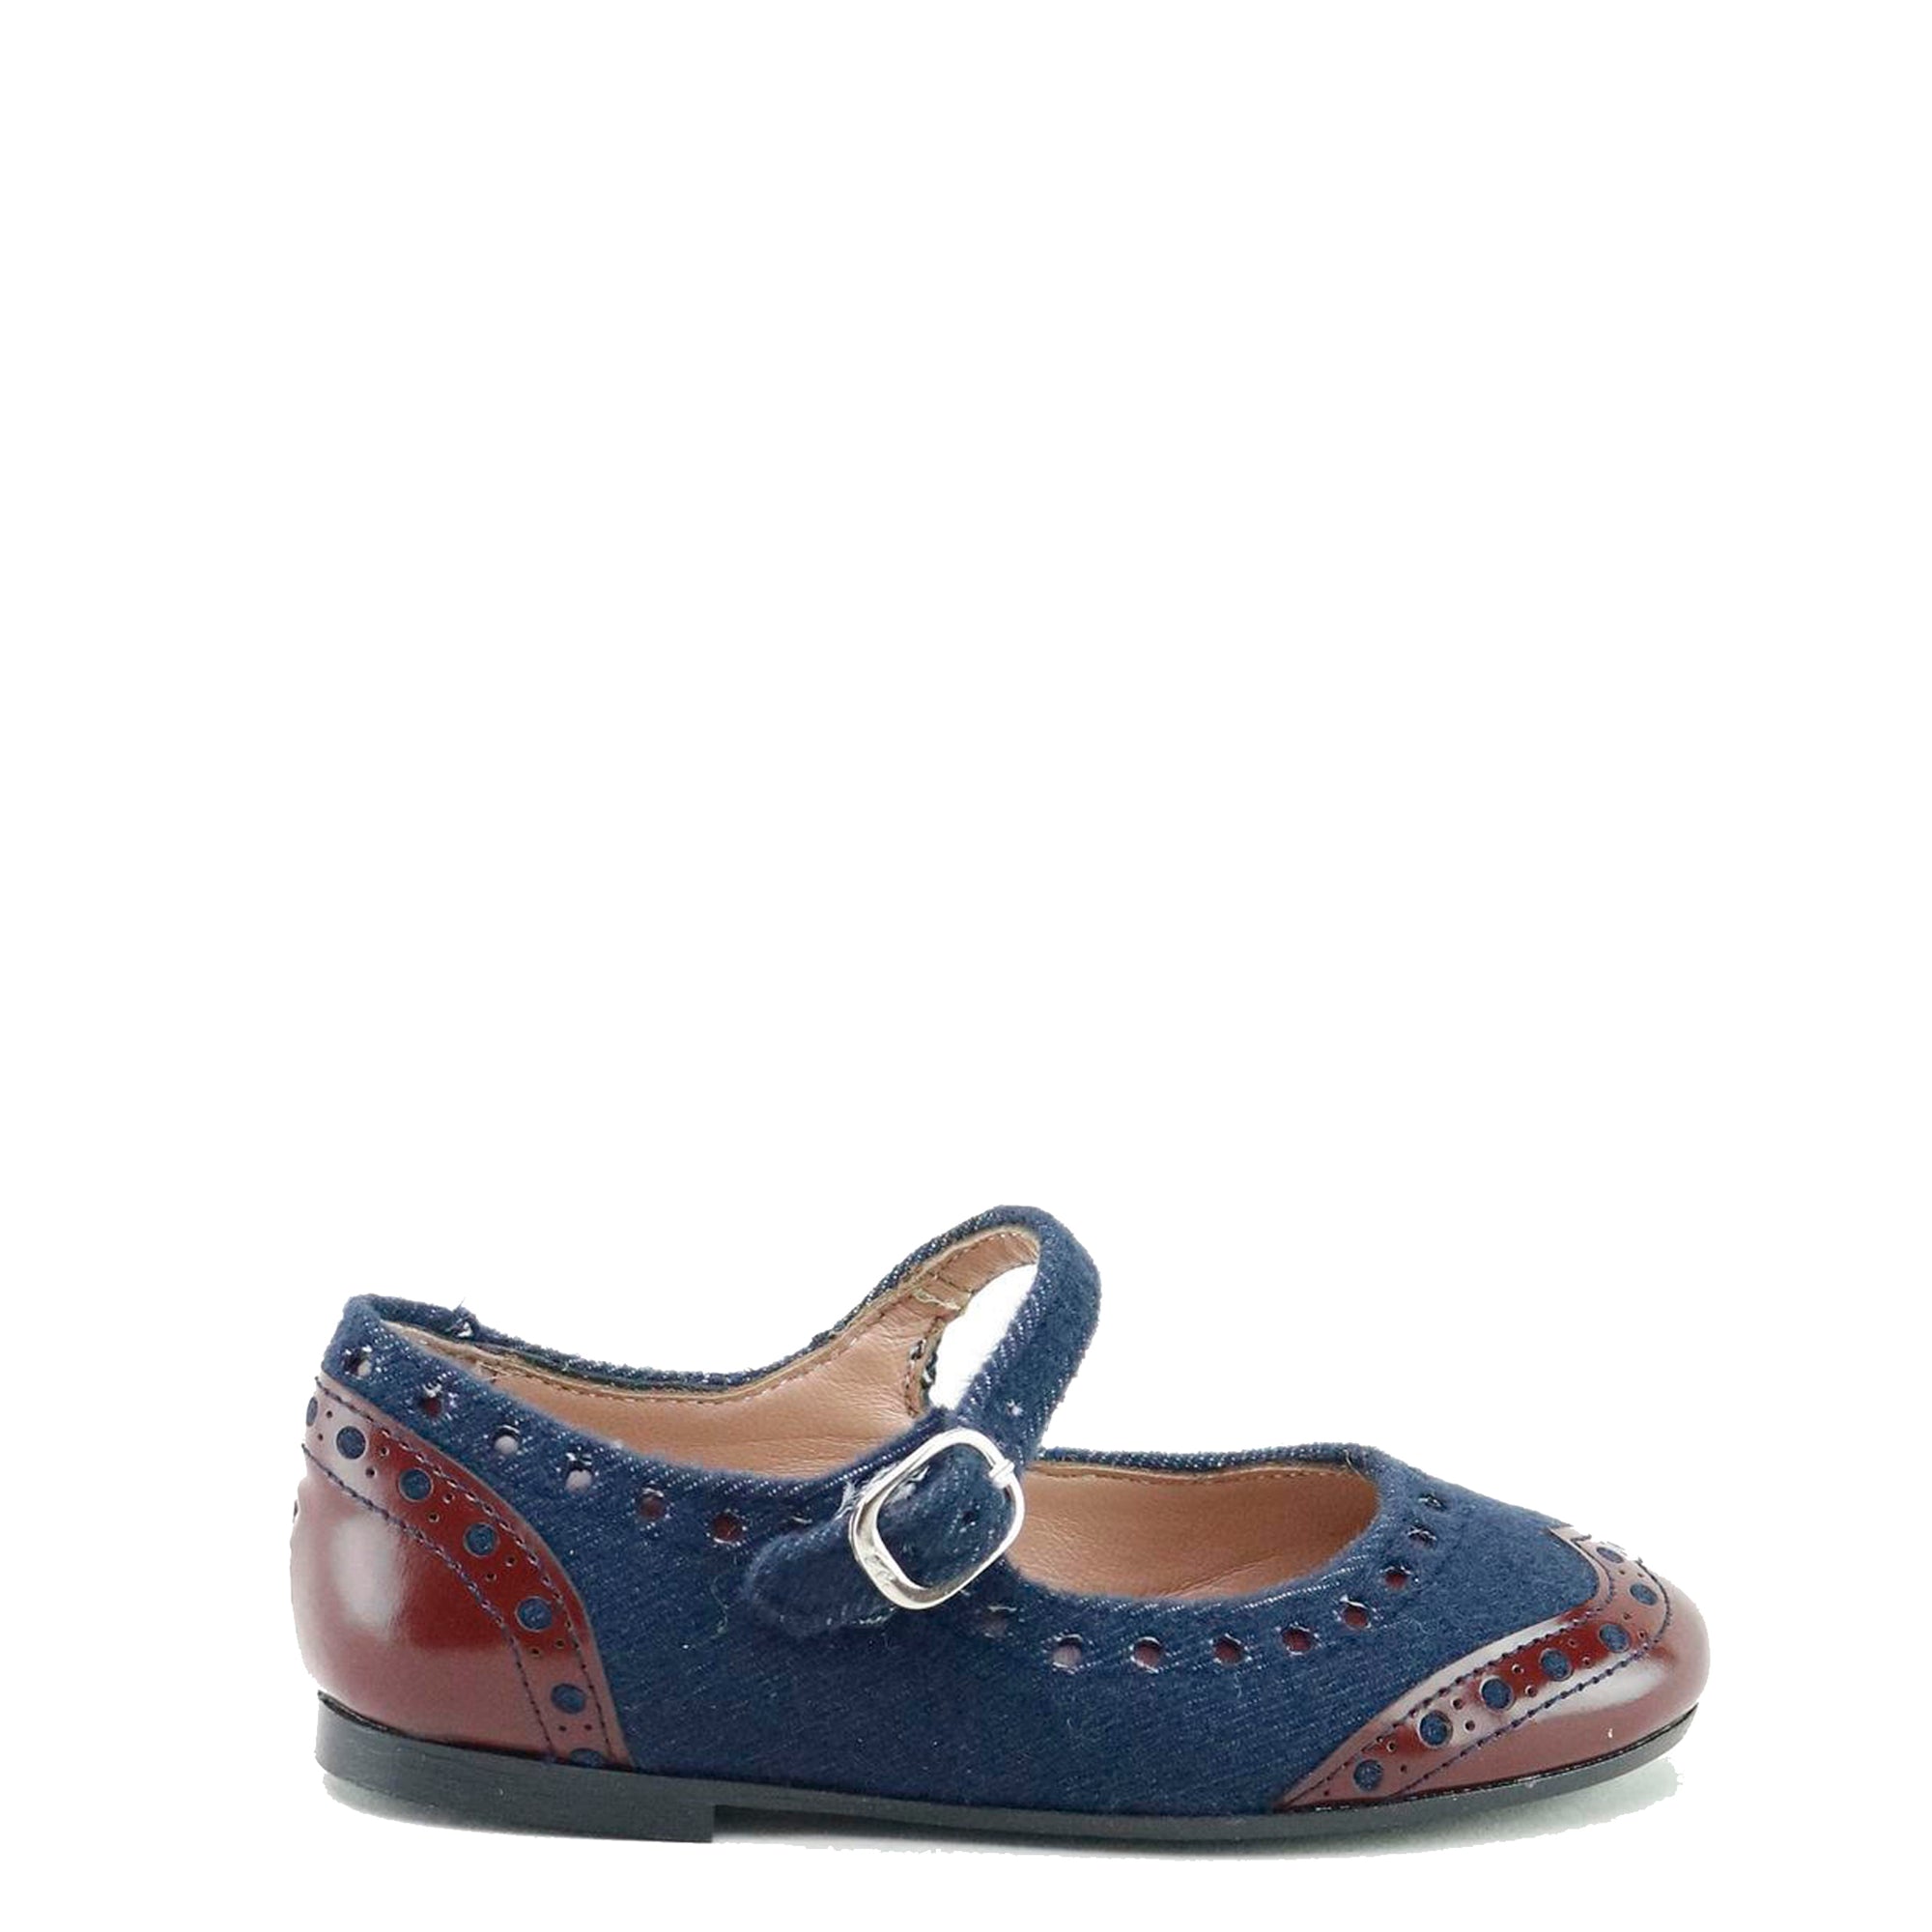 Papanatas Navy and Burgundy Wingtip Mary Jane-Tassel Children Shoes